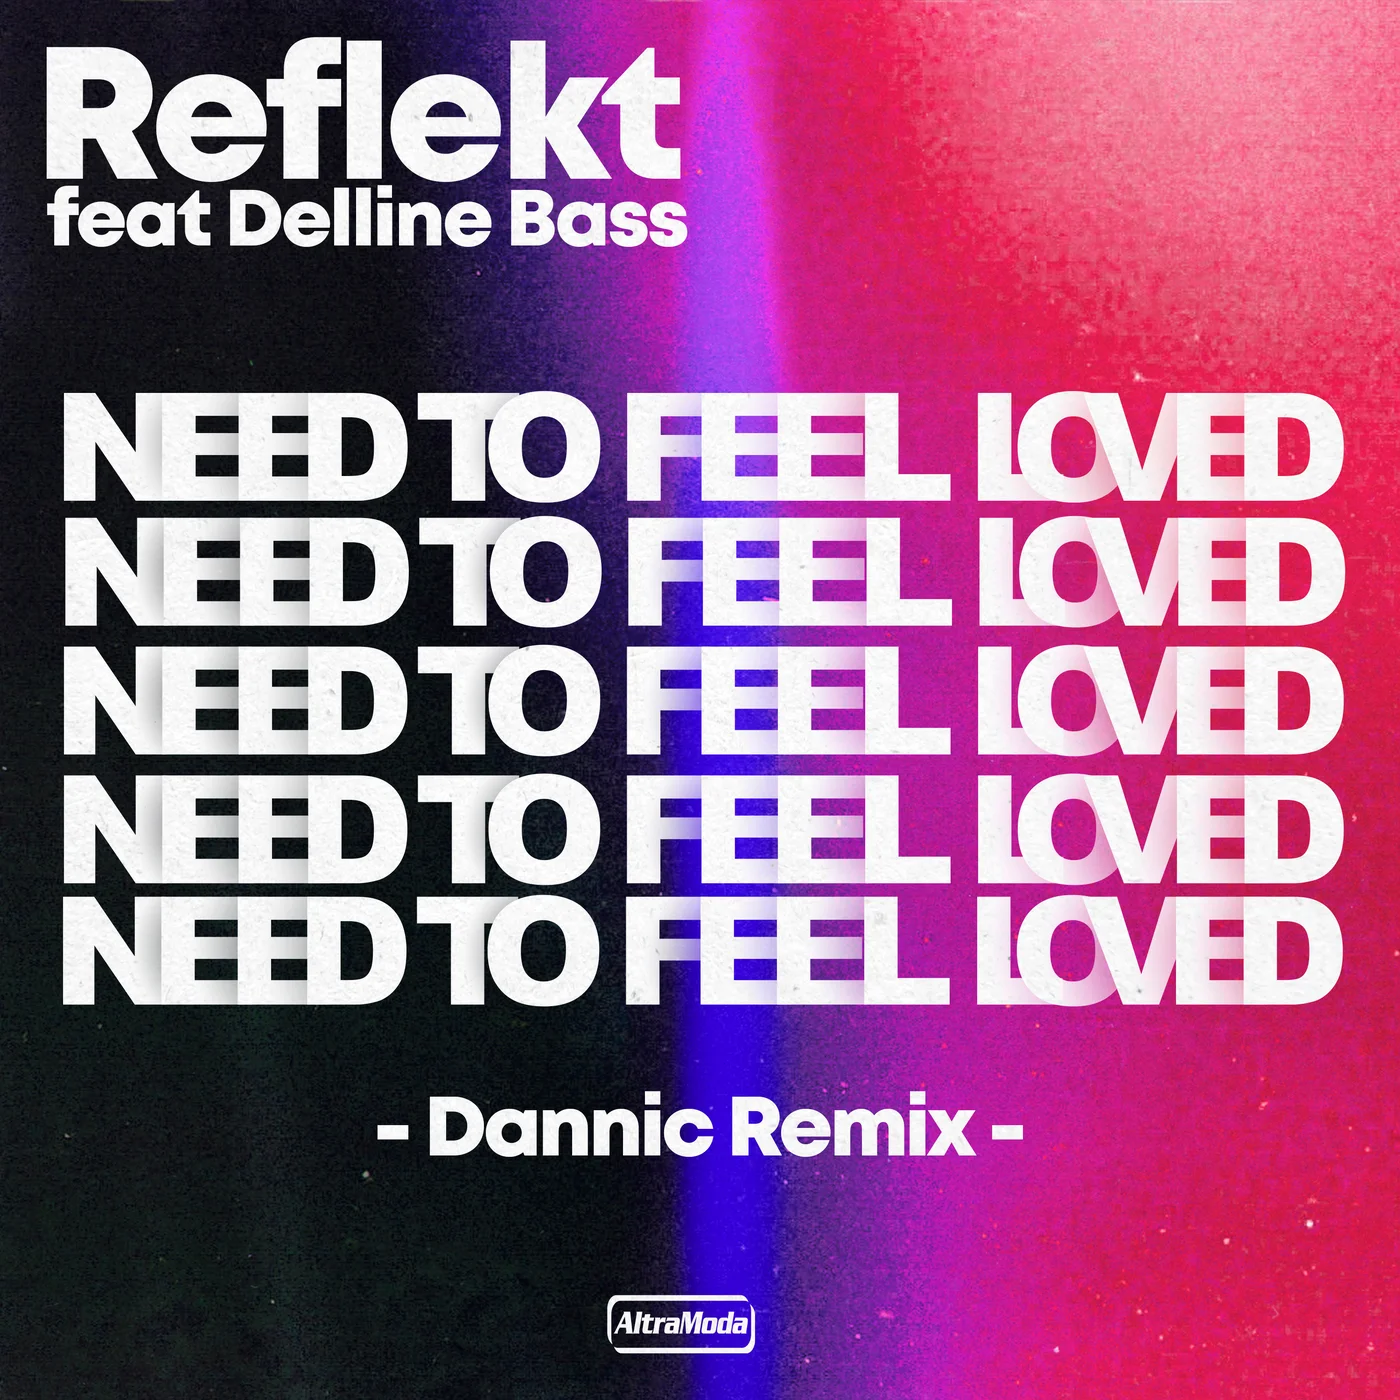 Reflekt feat. Delline Bass - Need To Feel Loved (Dannic Remix)